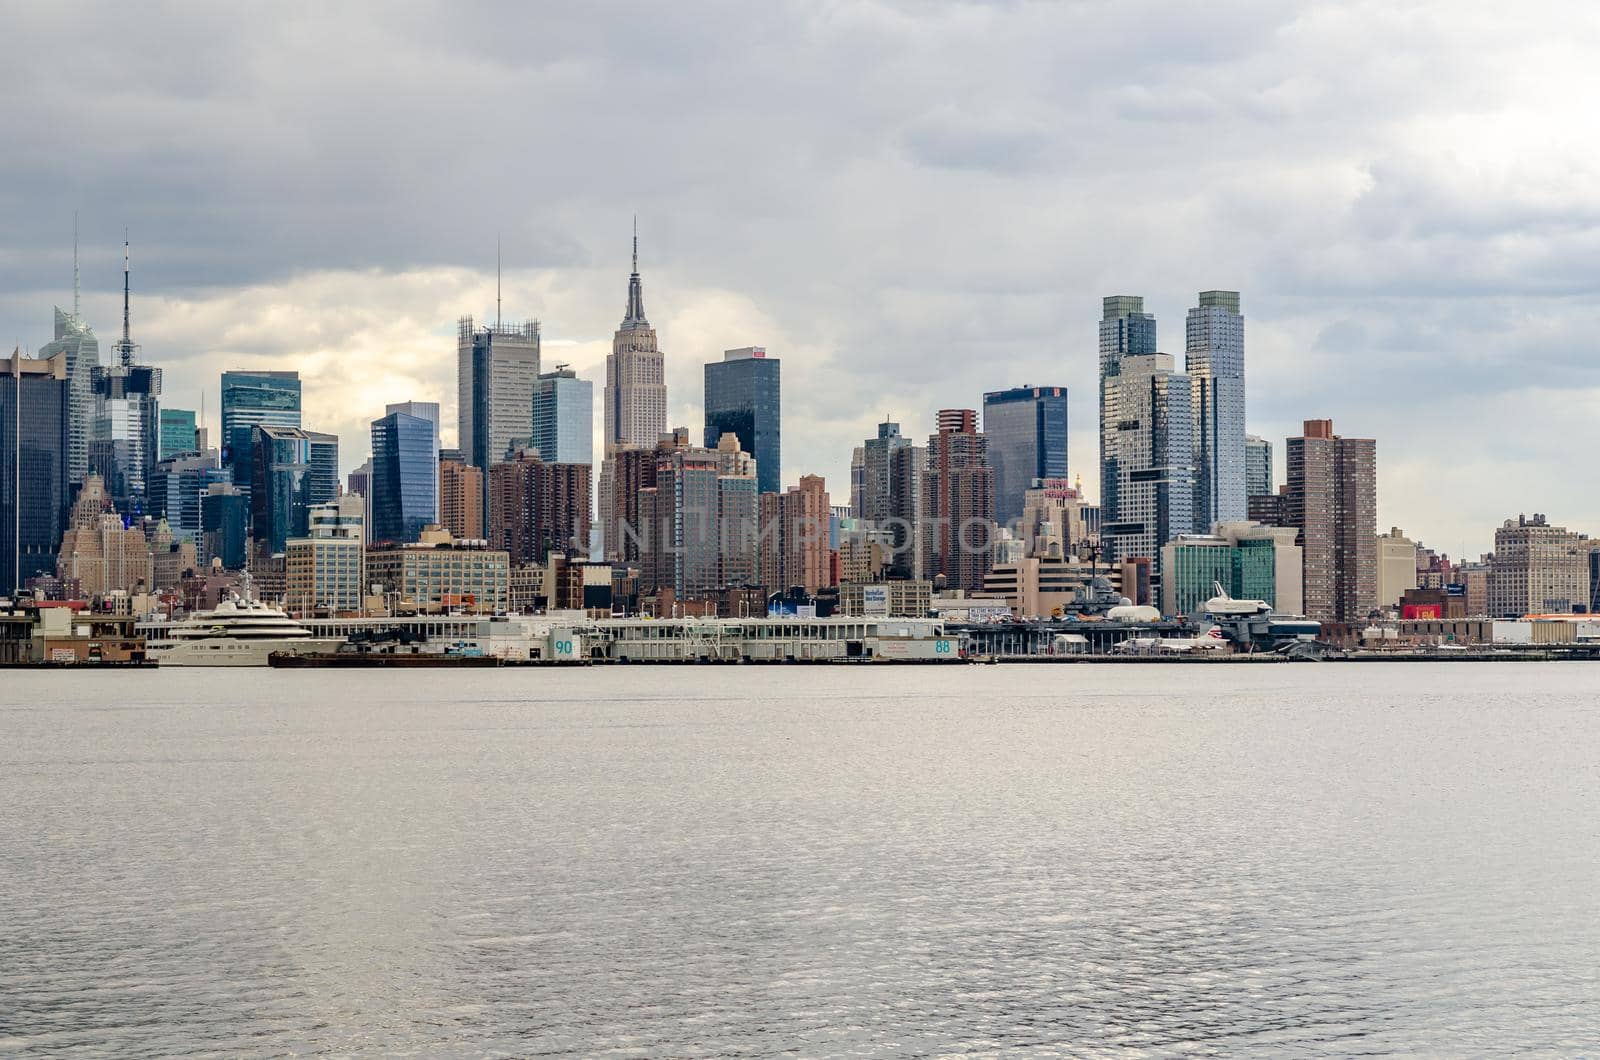 View of Manhattan Skyline, New York City with Hudson river in front by bildgigant